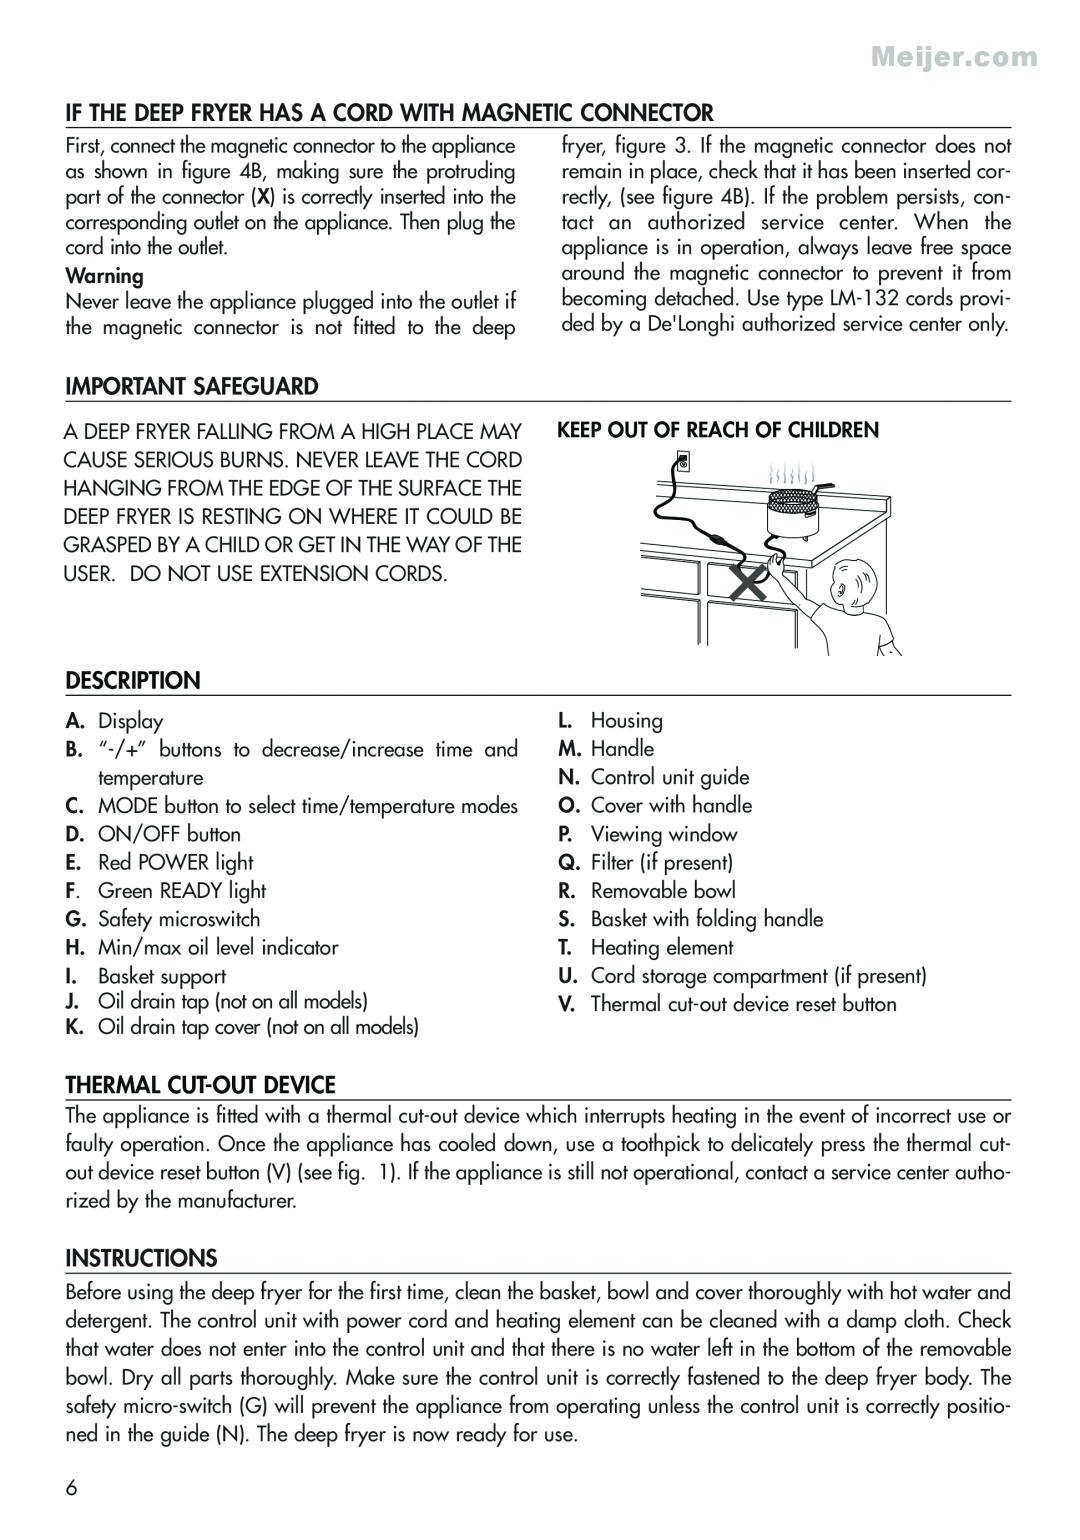 DeLonghi D24527 manual Important Safeguard, Description, Thermal Cut-Outdevice, Instructions 